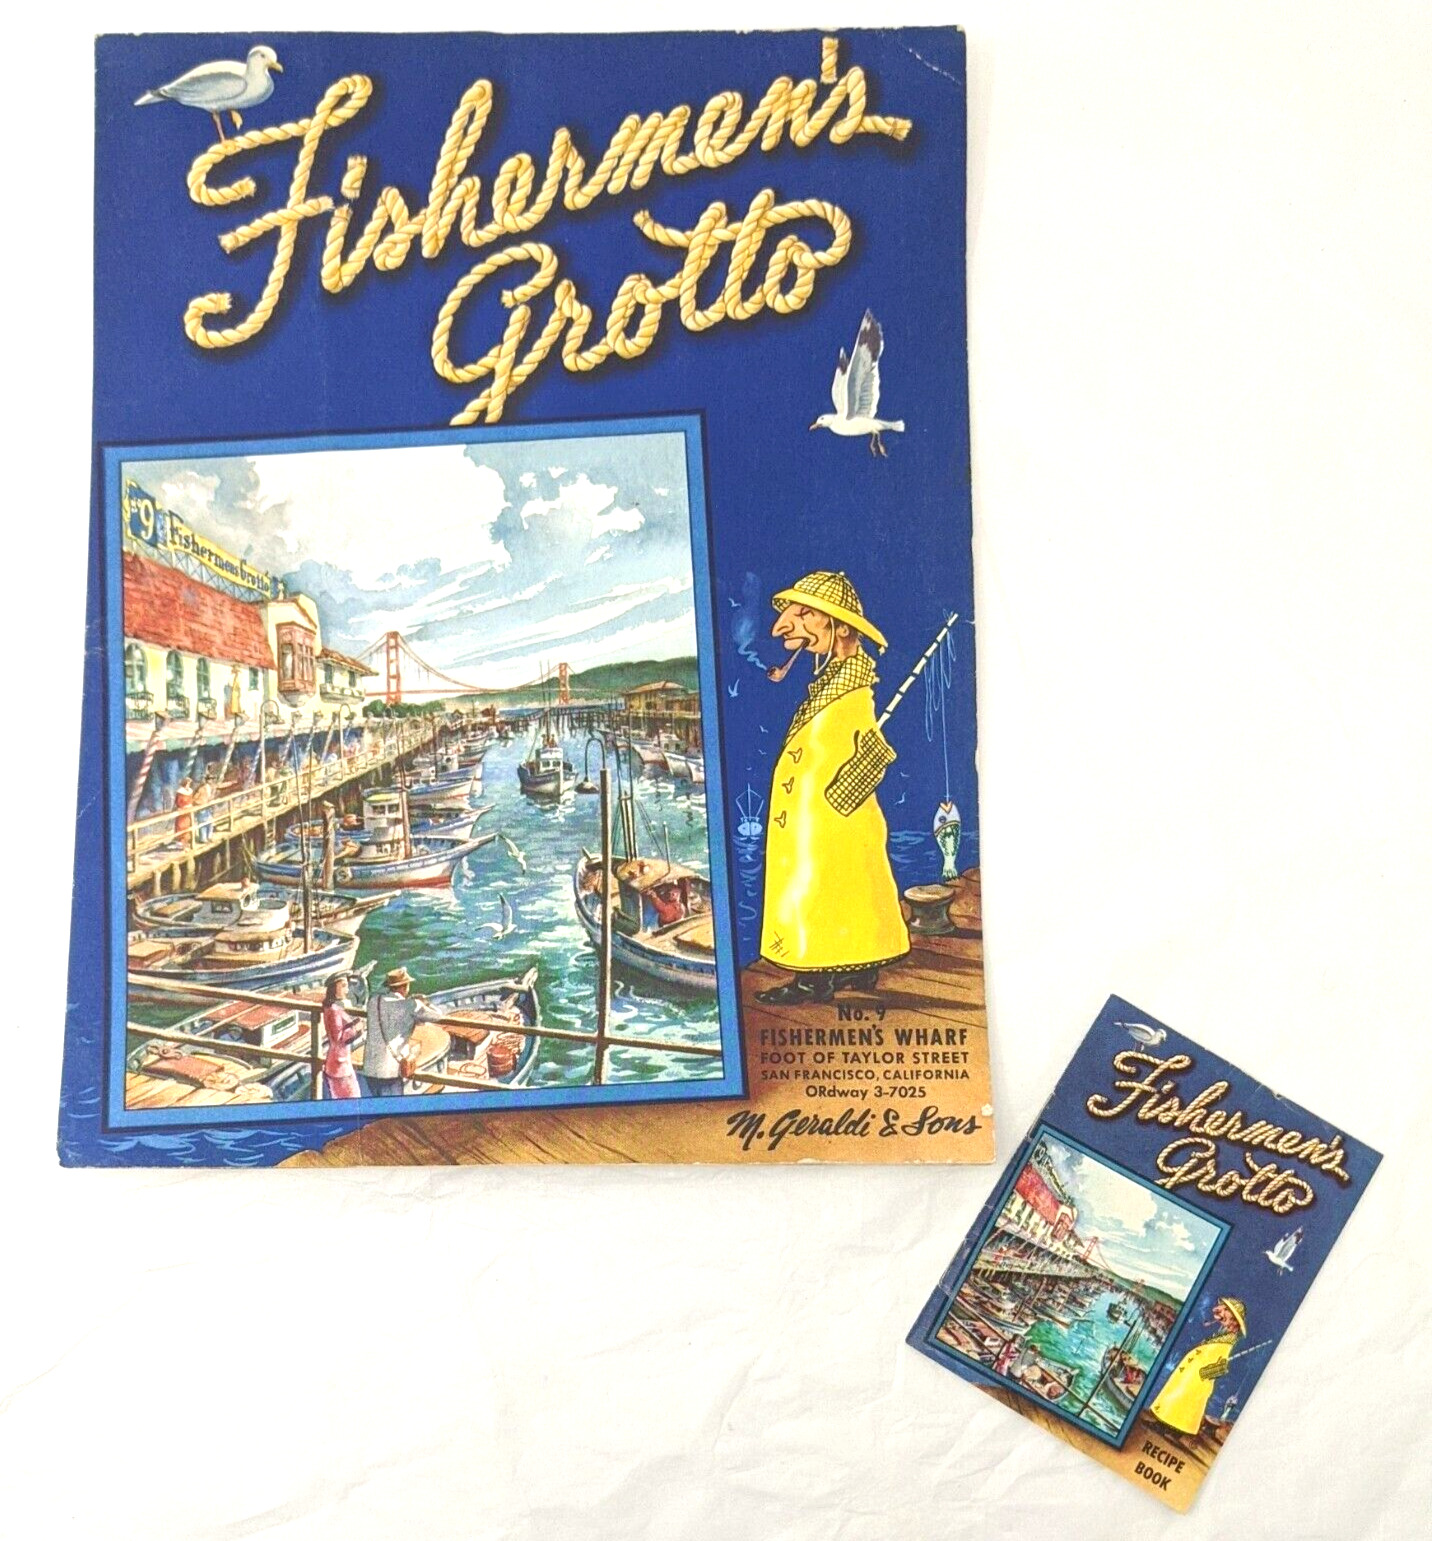 Vintage Fishermen's Grotto Restaurant Menu & Recipe Booklet San Francisco 1940s